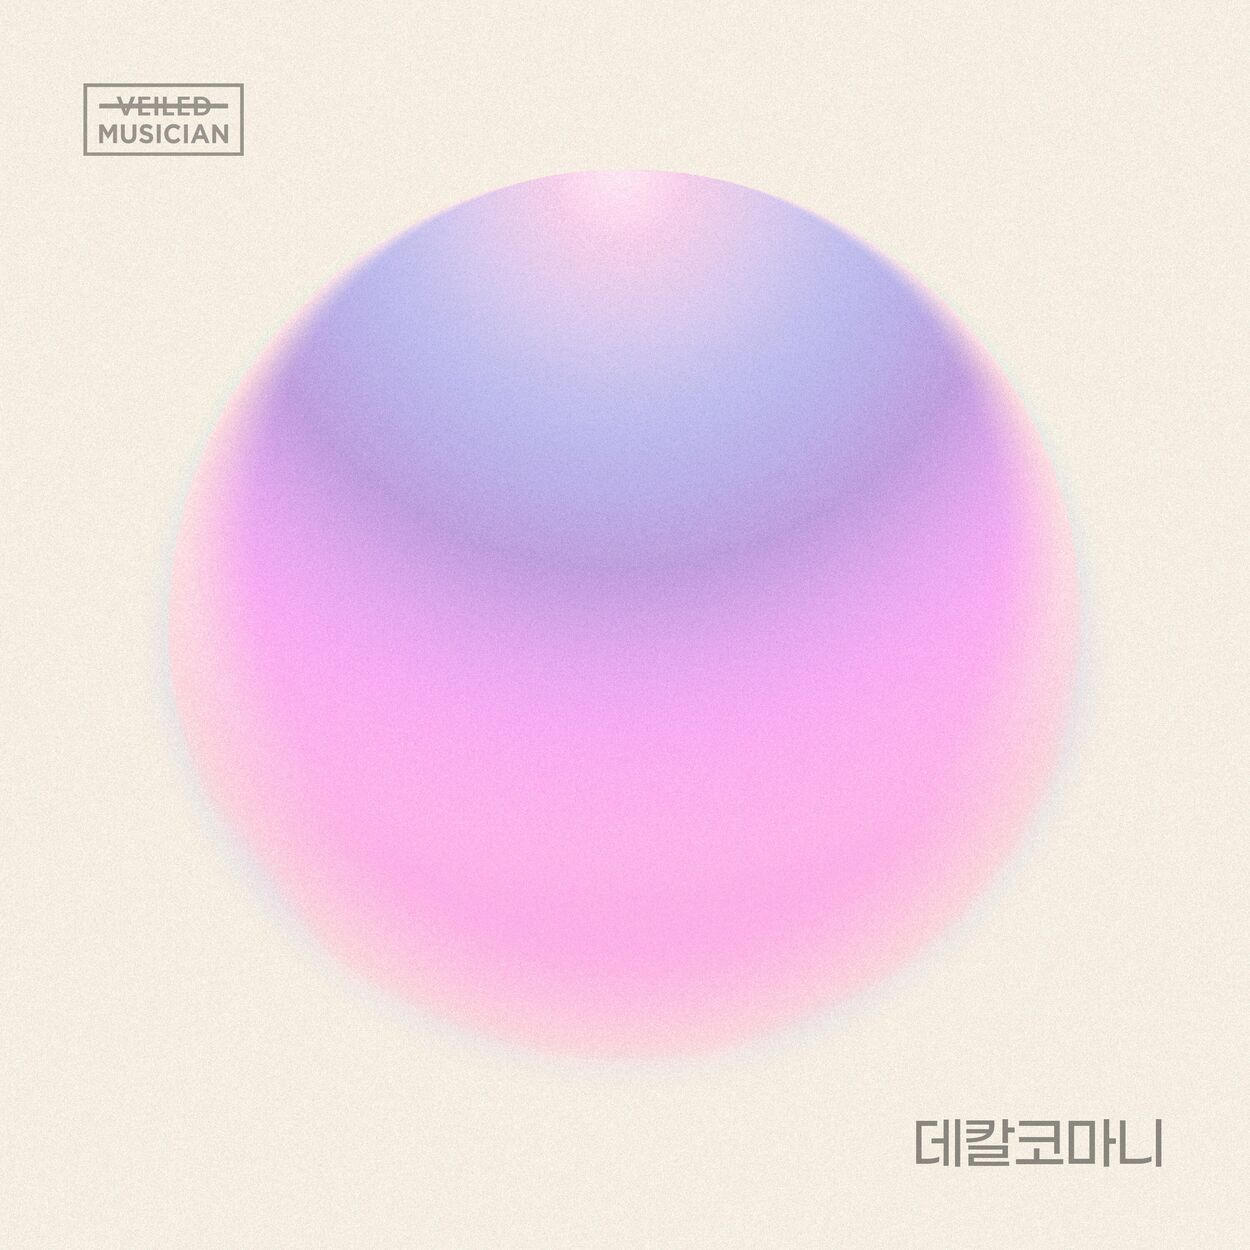 Solar (MAMAMOO) – Decalcomanie (Veiled Musician X Solar (MAMAMOO) with Jangwi-dong) – Single